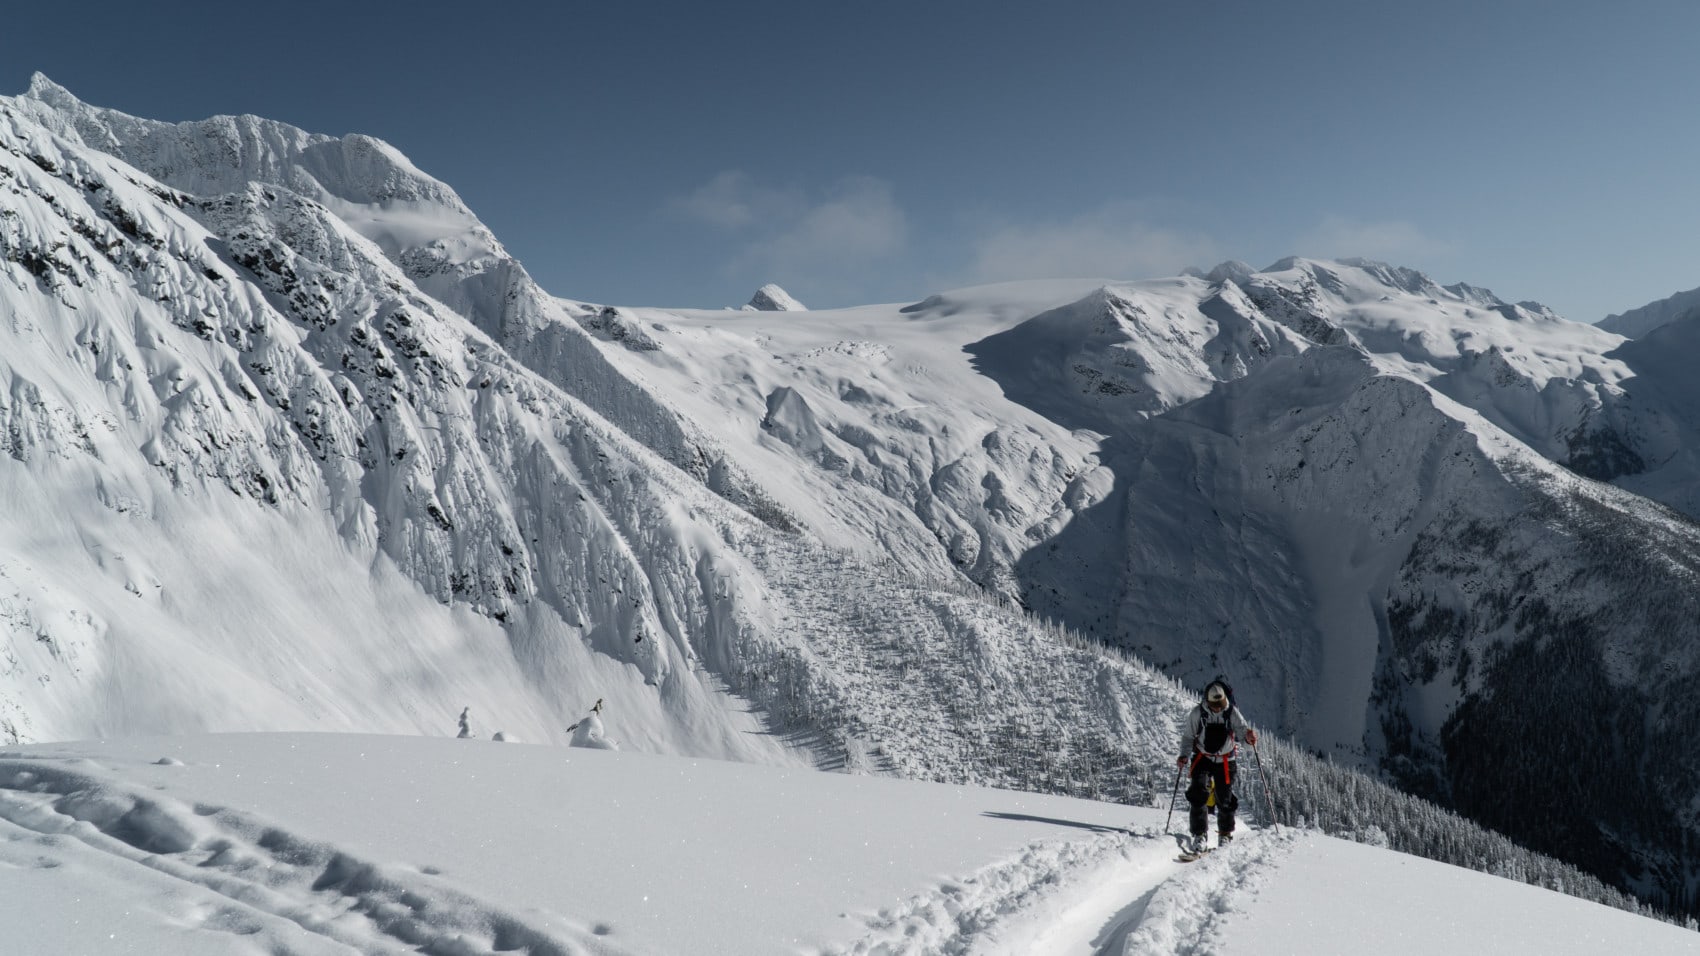 ski touring towards avalanche crest